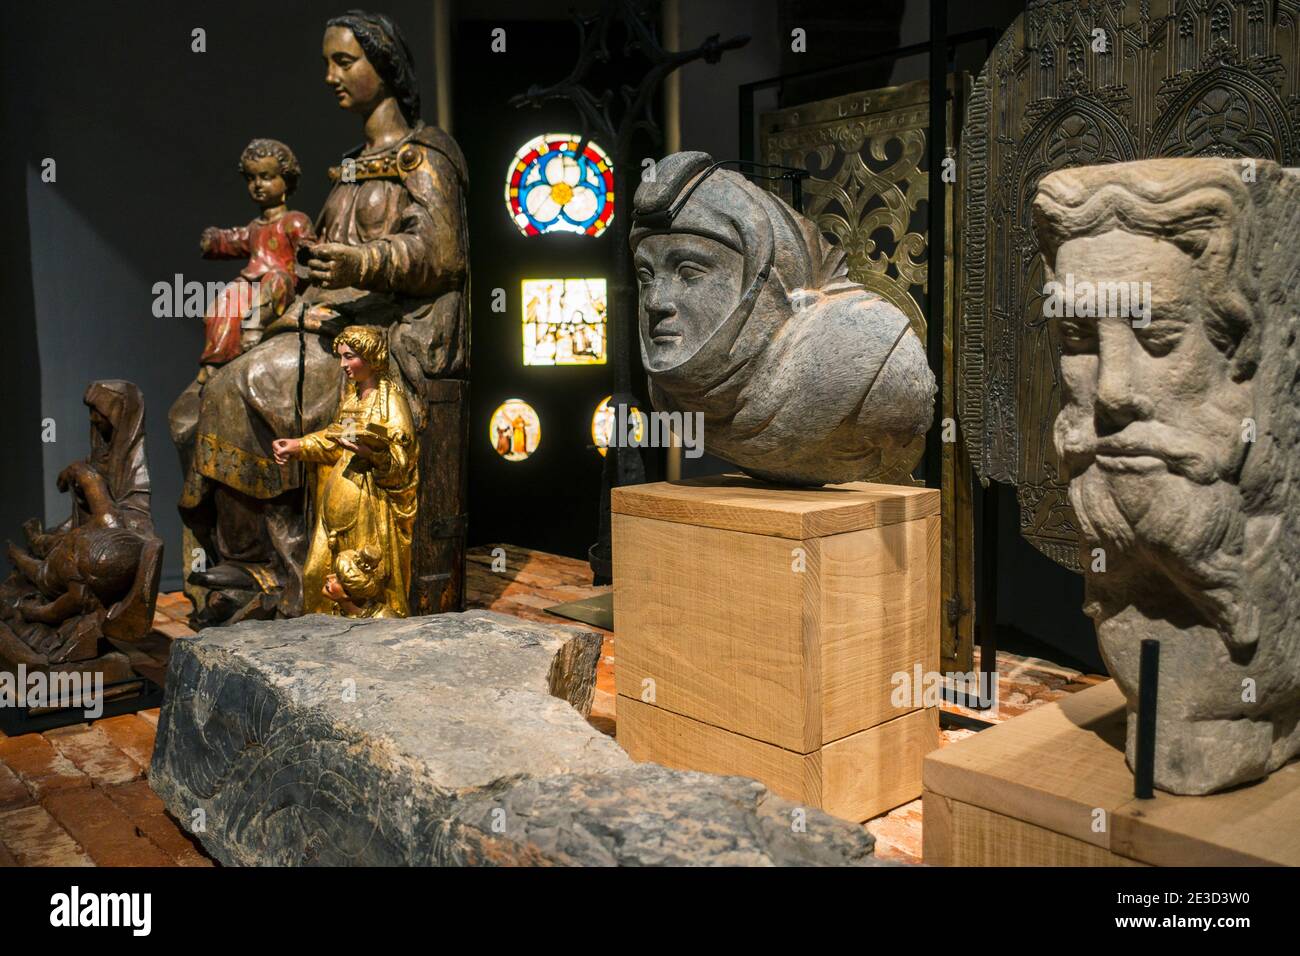 Arte religiosa medievale, statue e sculture a STAM, Ghent City Museum / Stadsmuseum Gent, Fiandre Orientali, Belgio Foto Stock